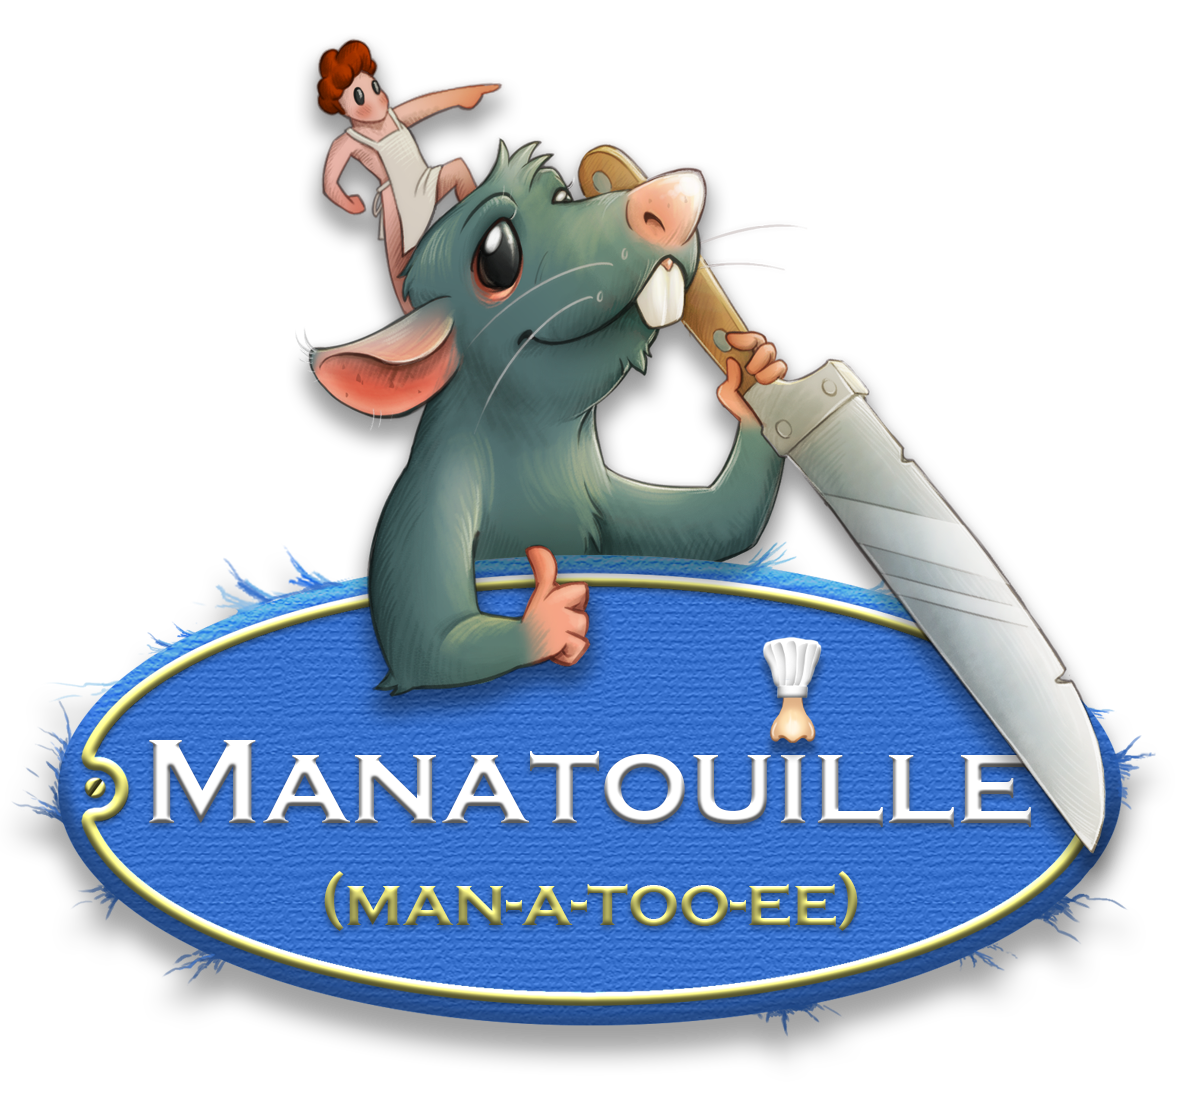 Manatouille